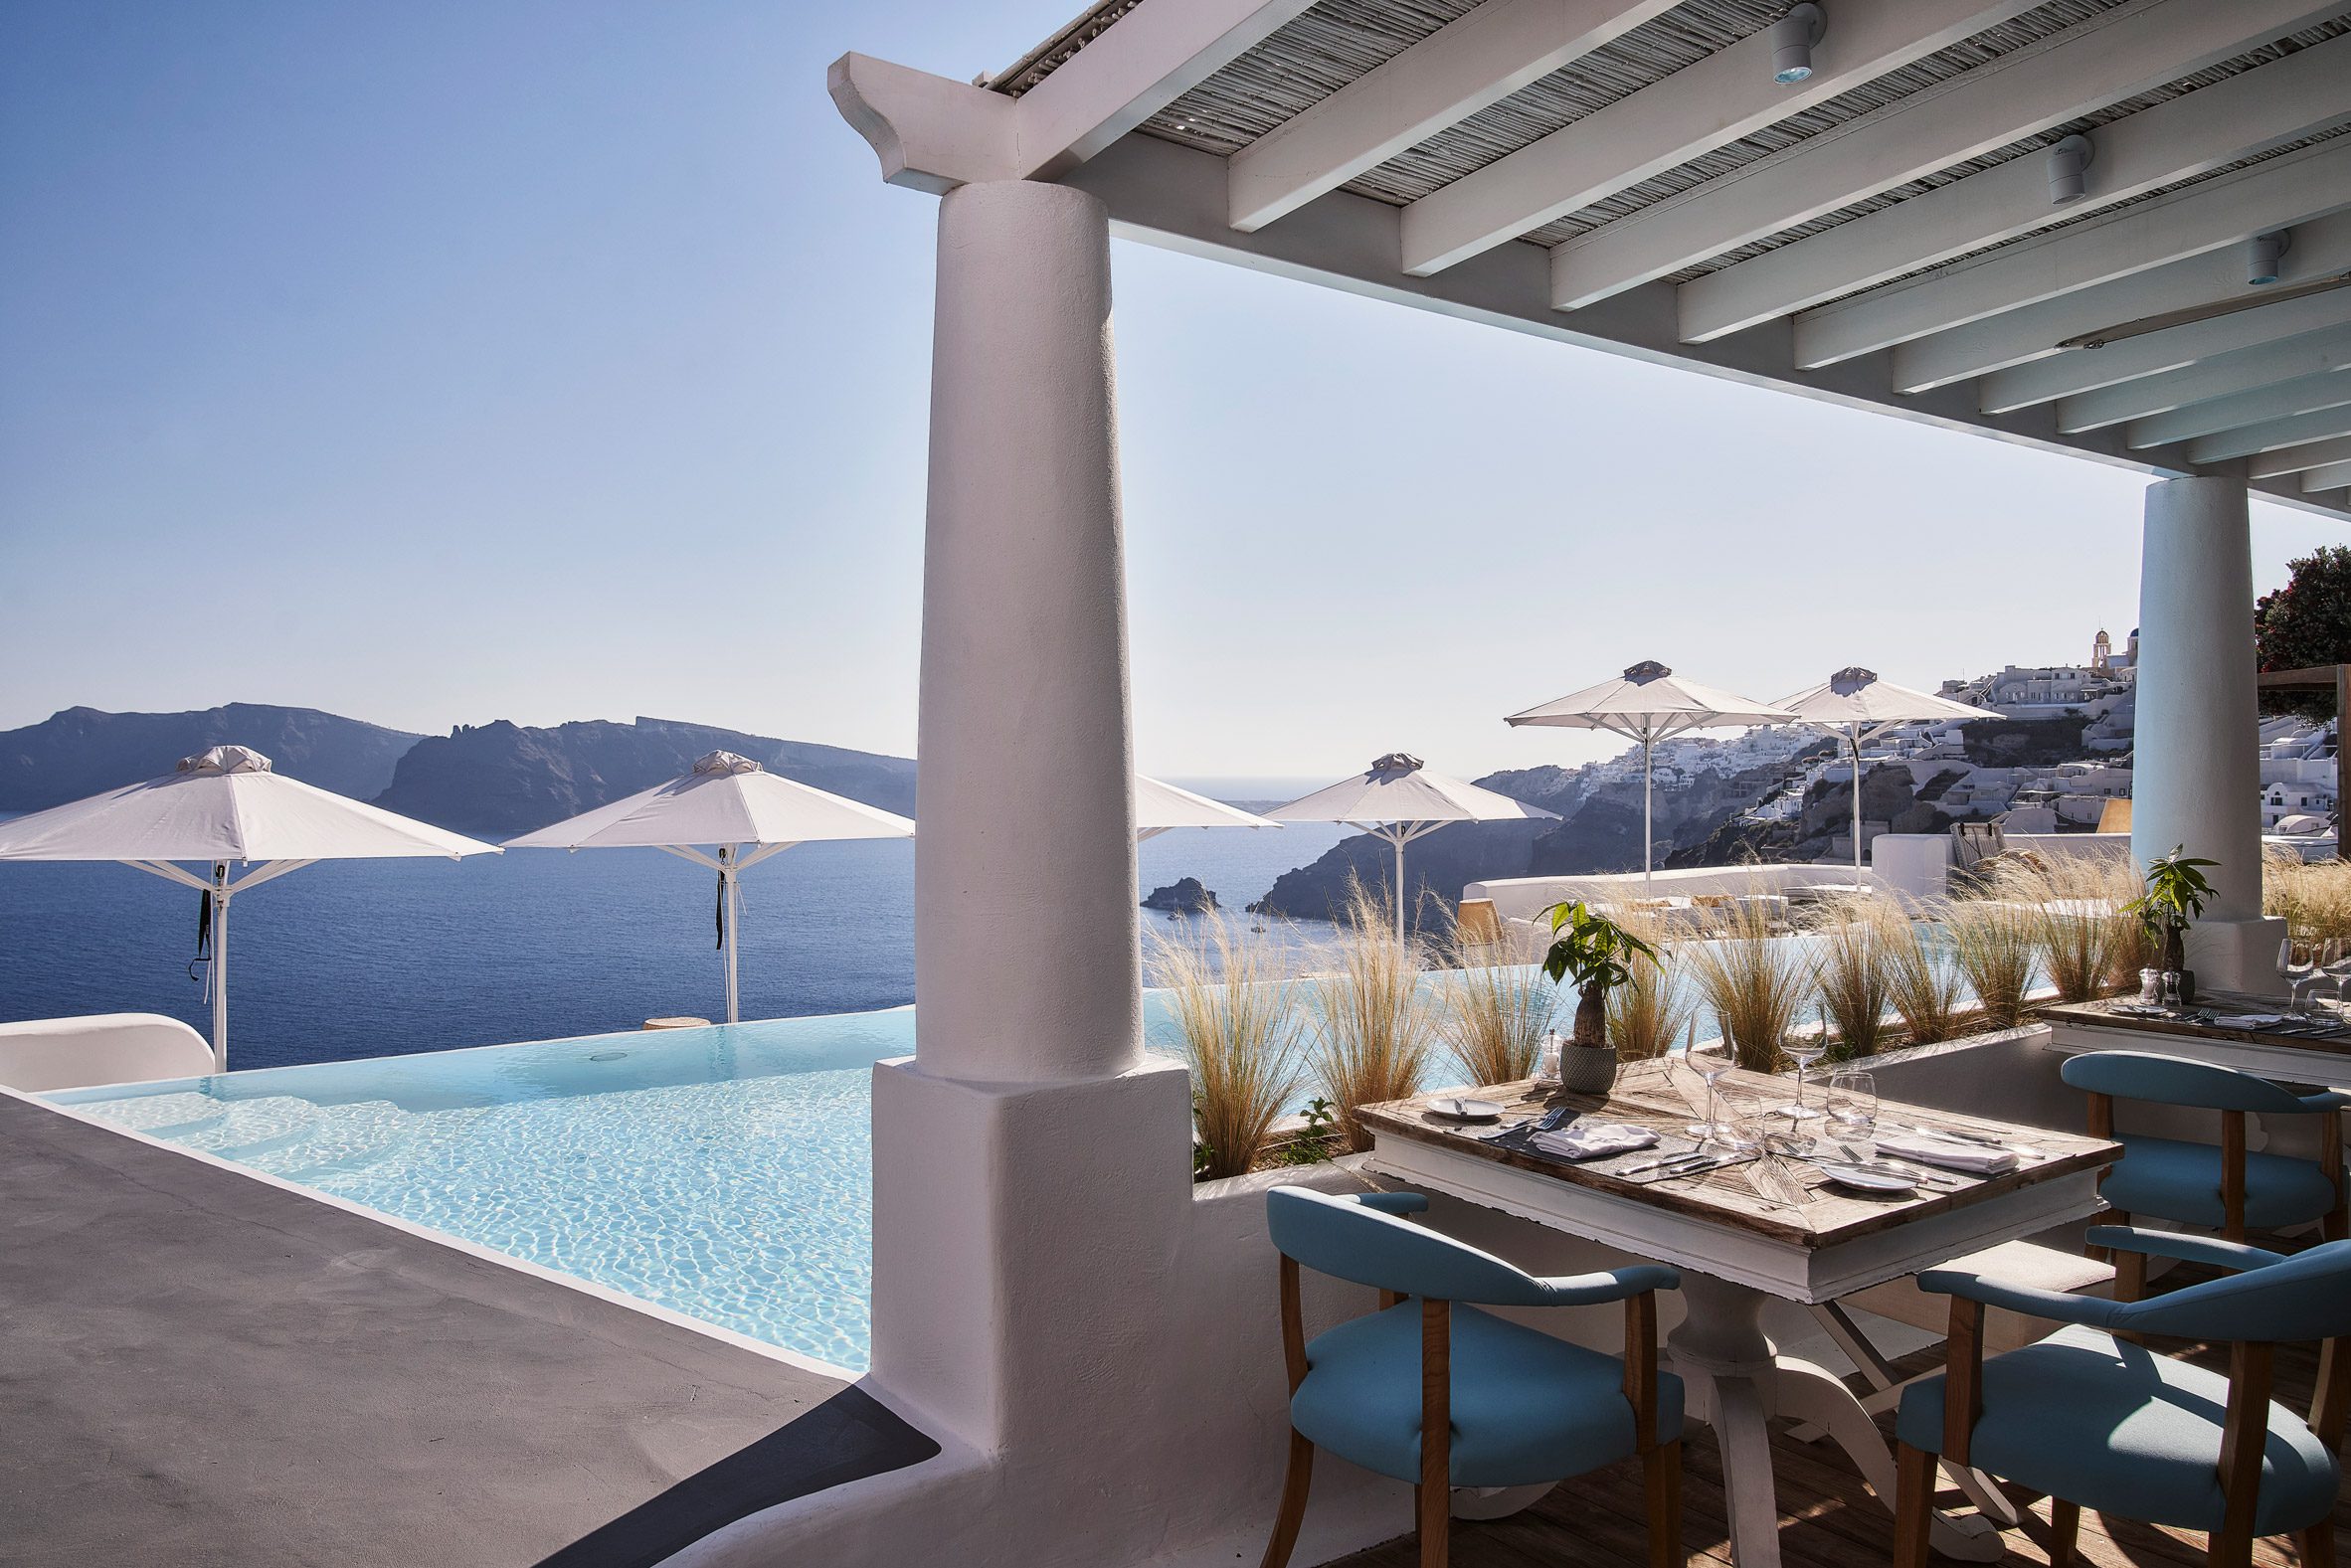 Restaurant overlooking infinity pool and caldera